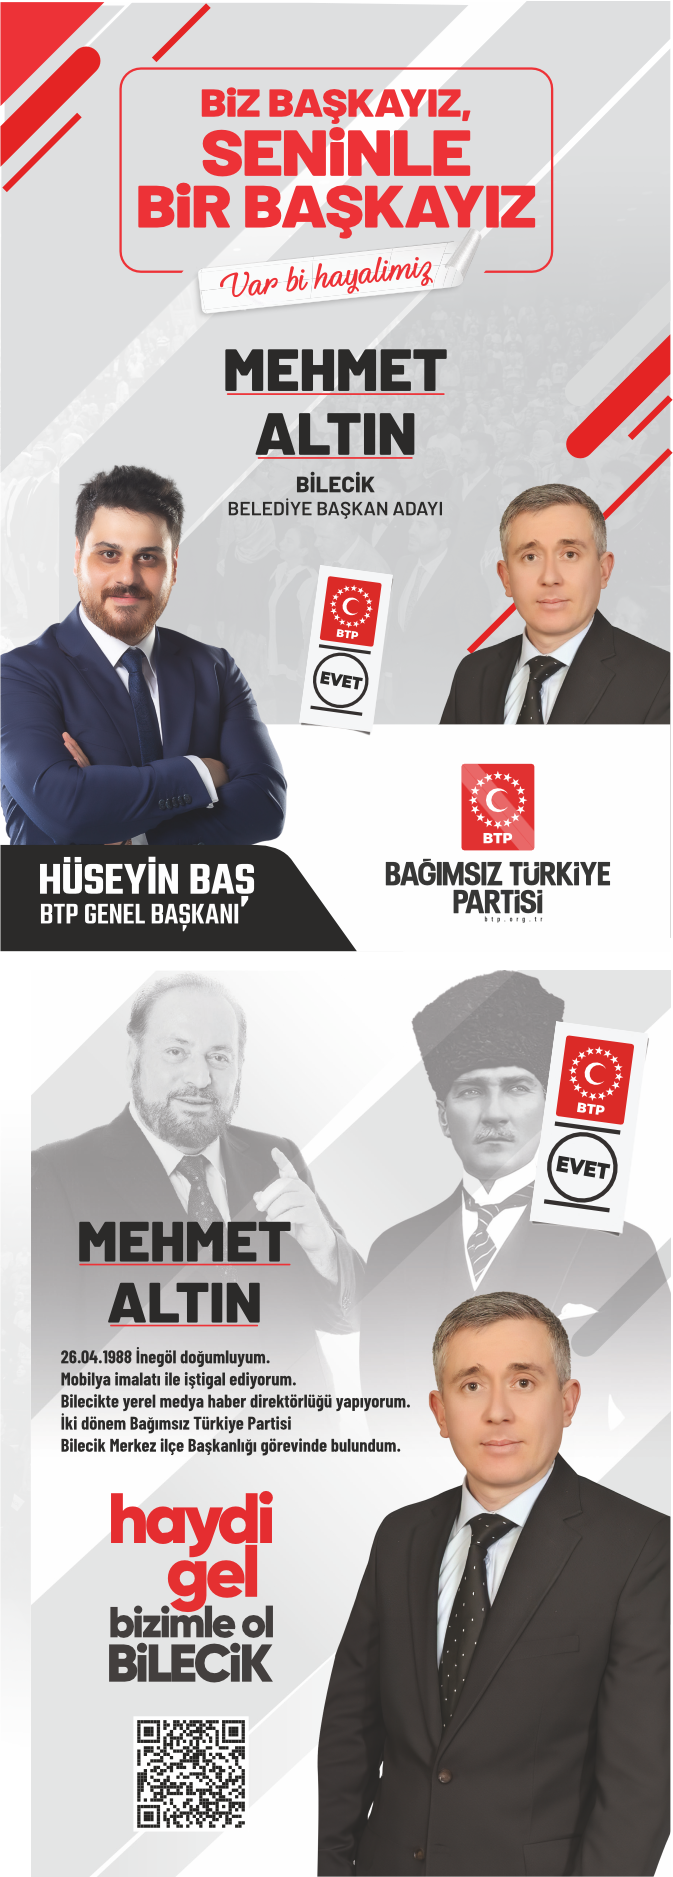 mehmet-altin-bagimsiz-turkiye-partisi1-001.png